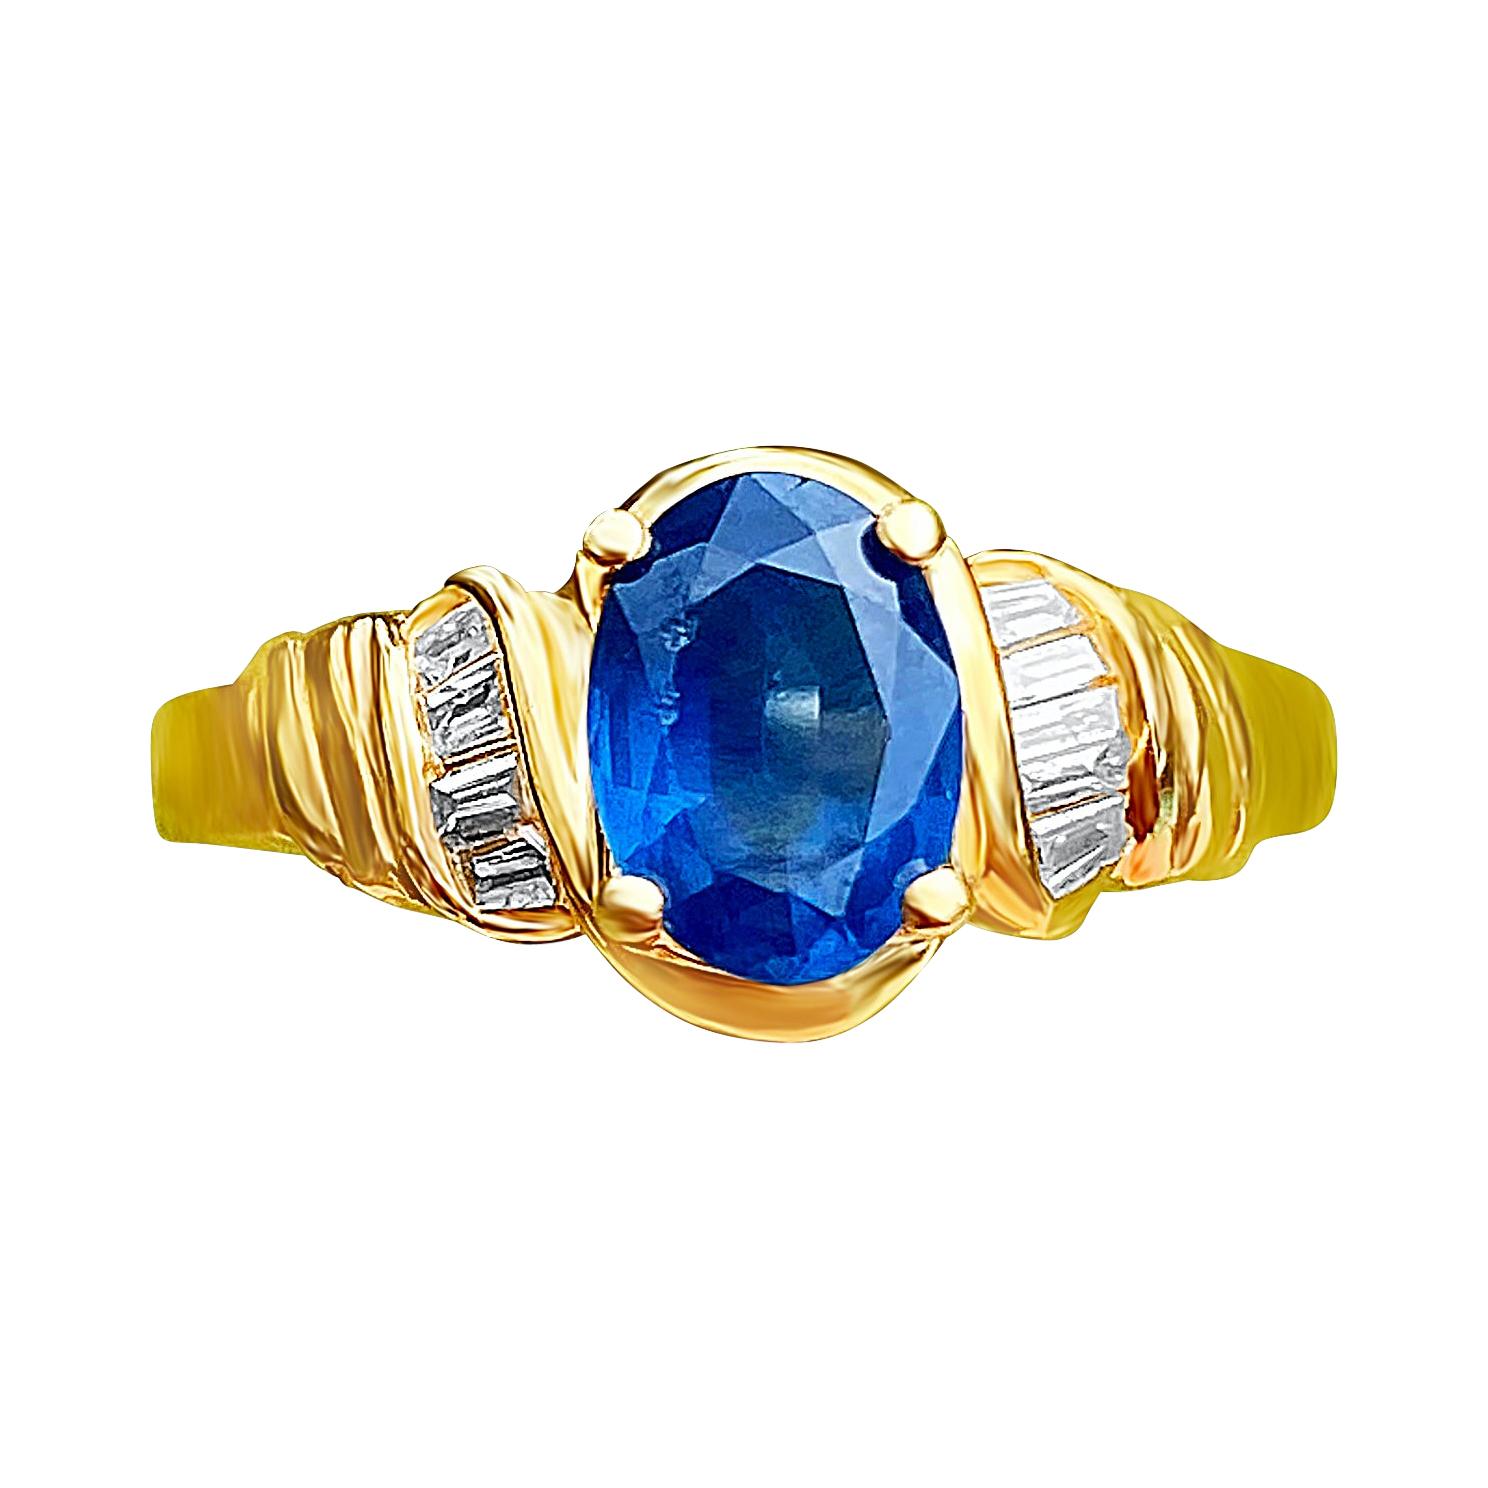 1.22 Carat Oval Cut Ceylon Sapphire and Diamond Ring 14k Gold Sri Lanka Sapphire